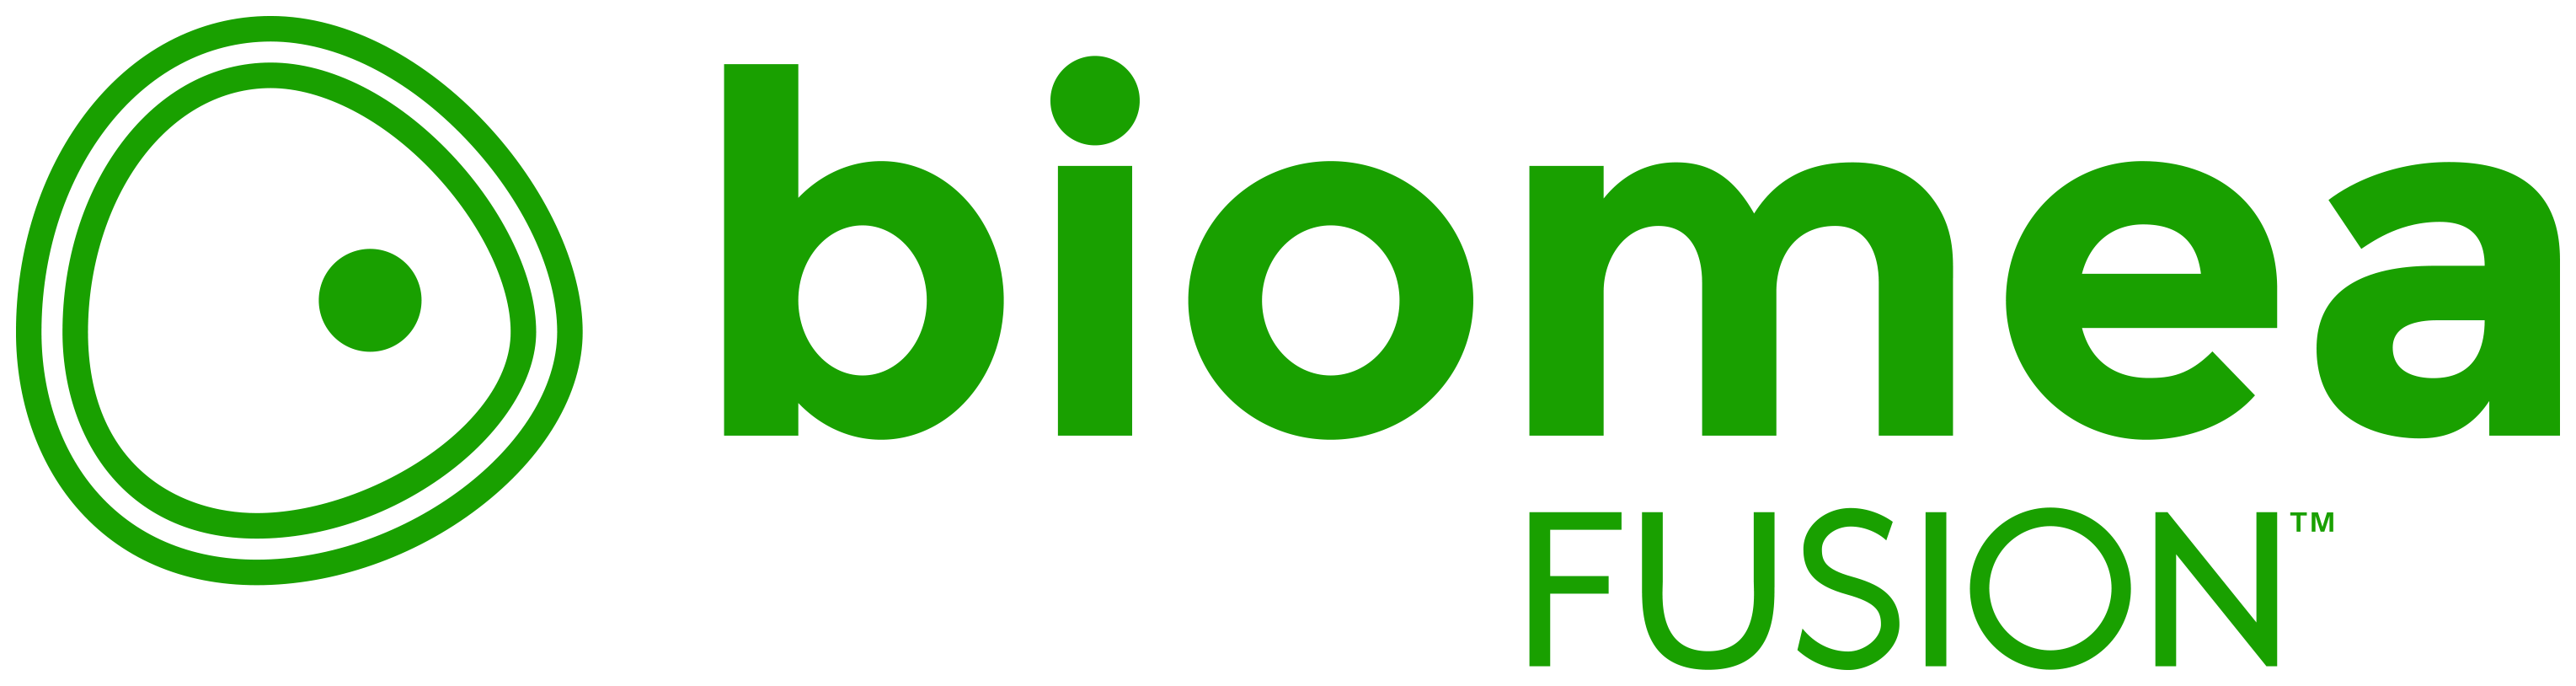 Biomea Fusion, Inc. Reports Inducement Grants under Nasdaq